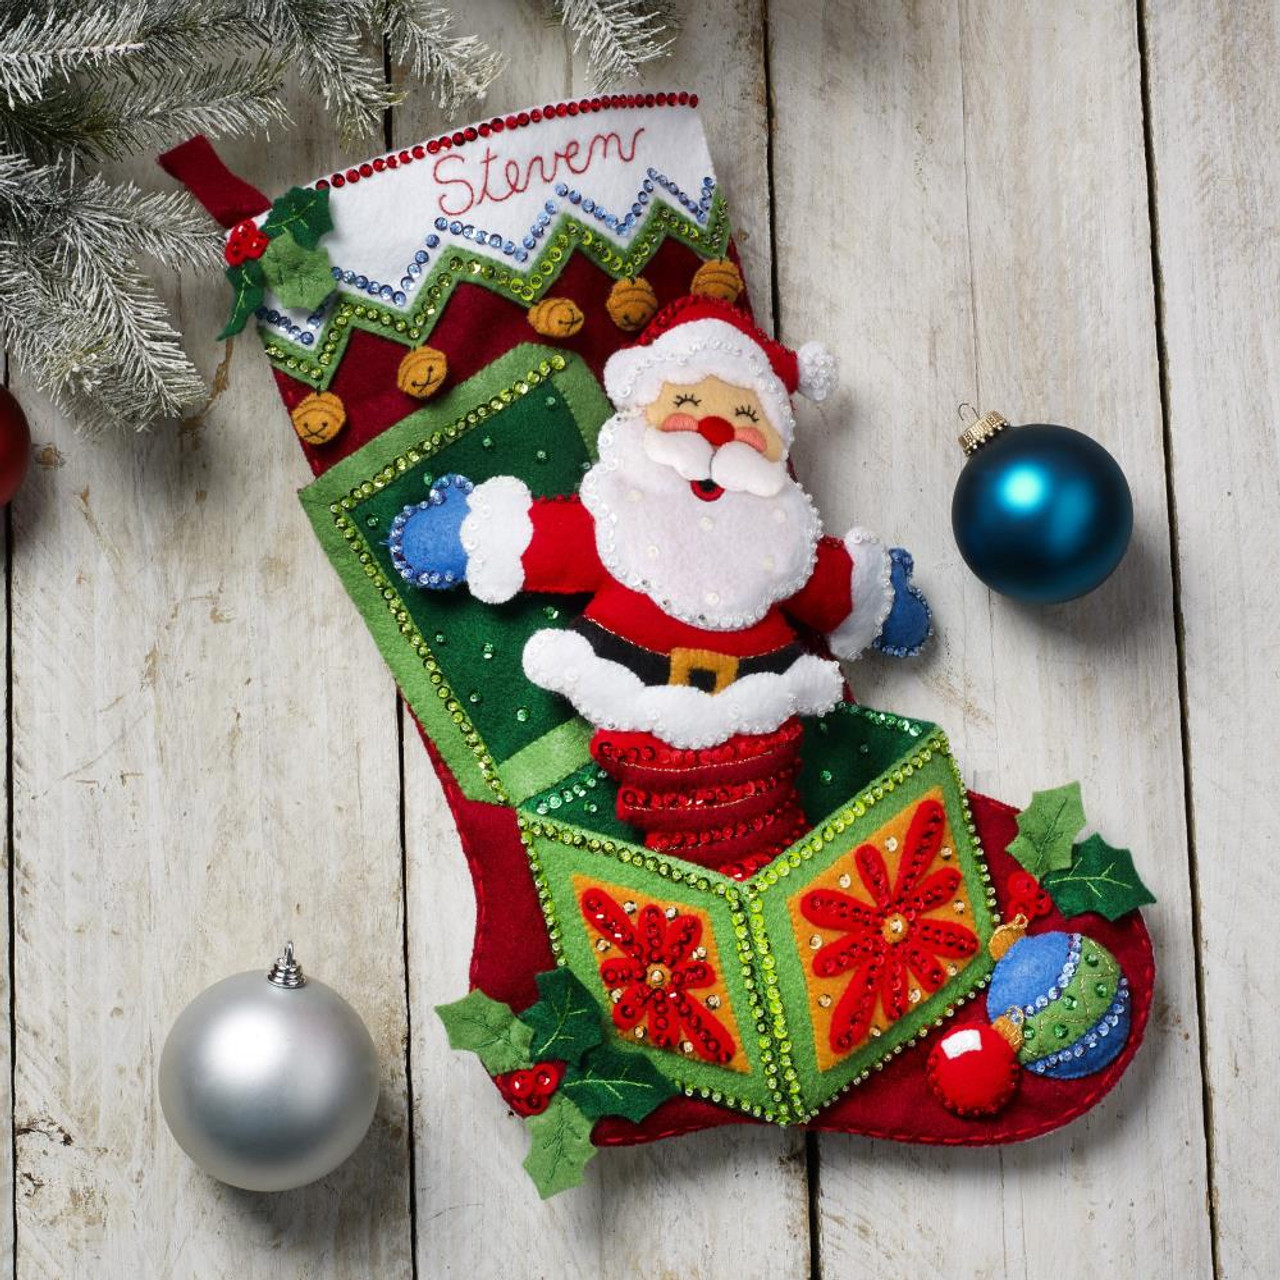 Bucilla Felt Stocking Applique Kit - Santa's Visit 18